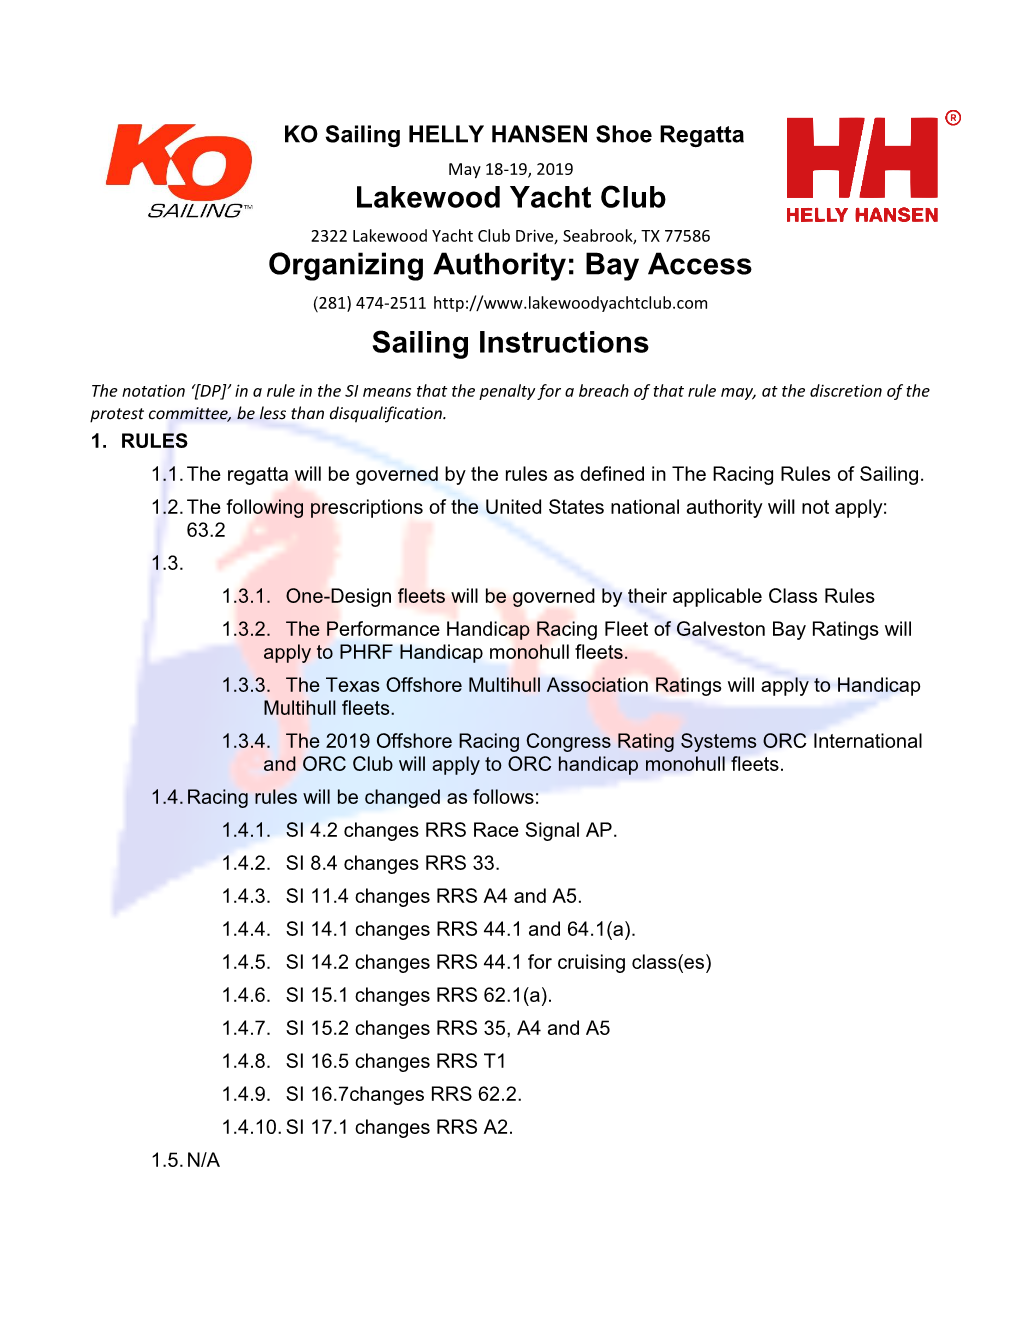 Lakewood Yacht Club Organizing Authority: Bay Access Sailing Instructions